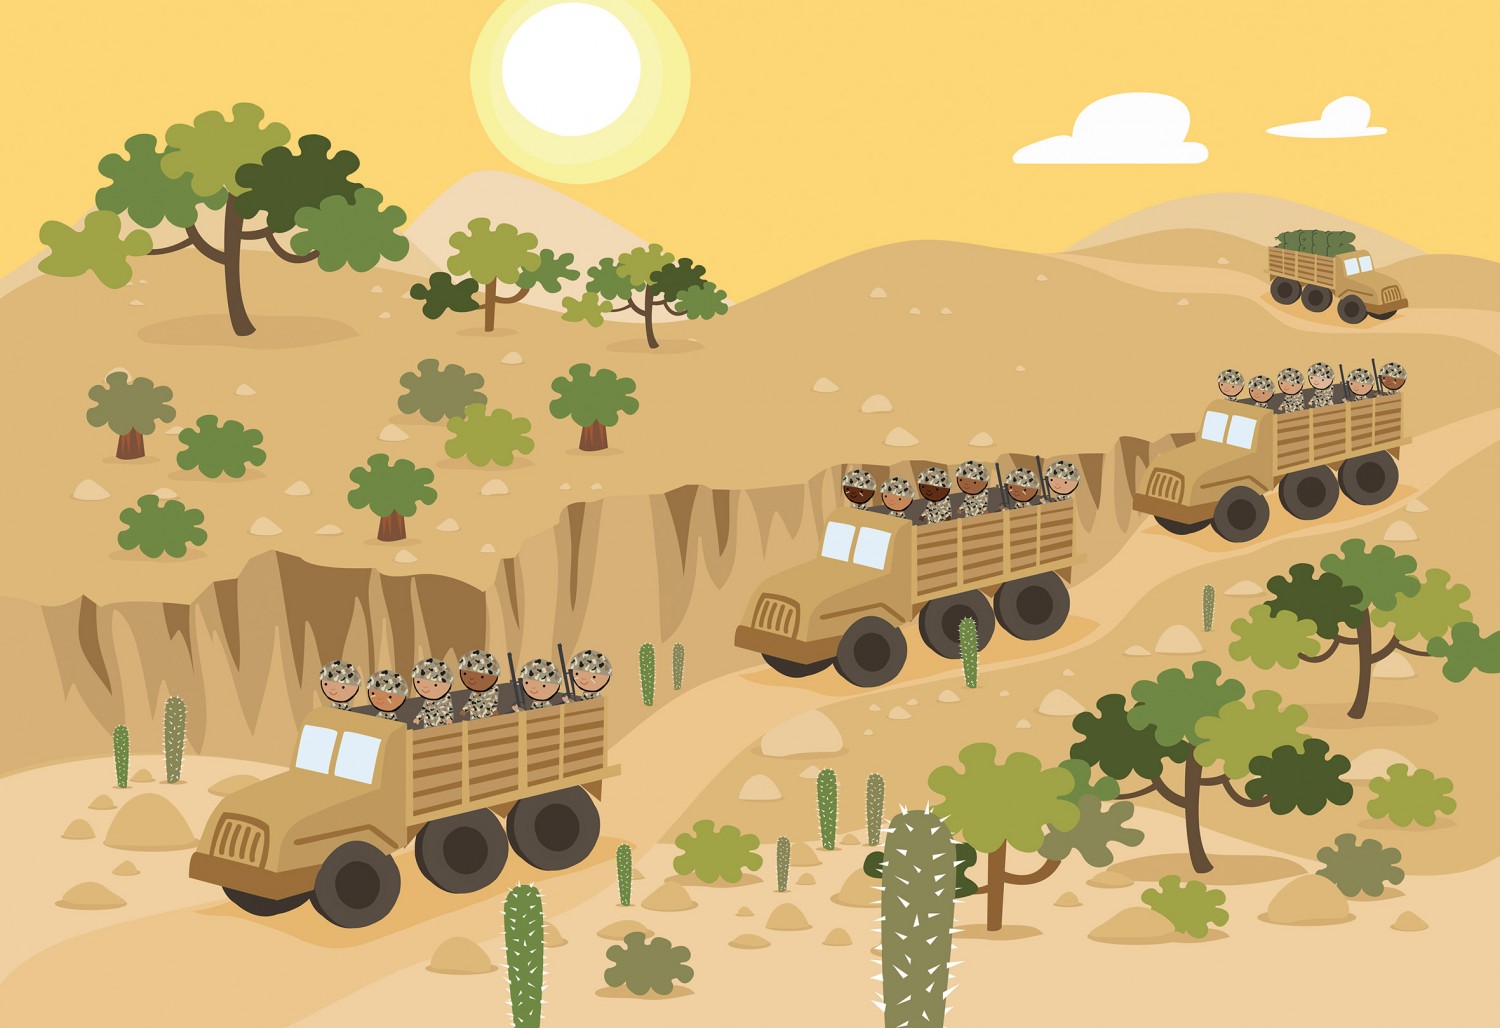 Soldiers' Desert